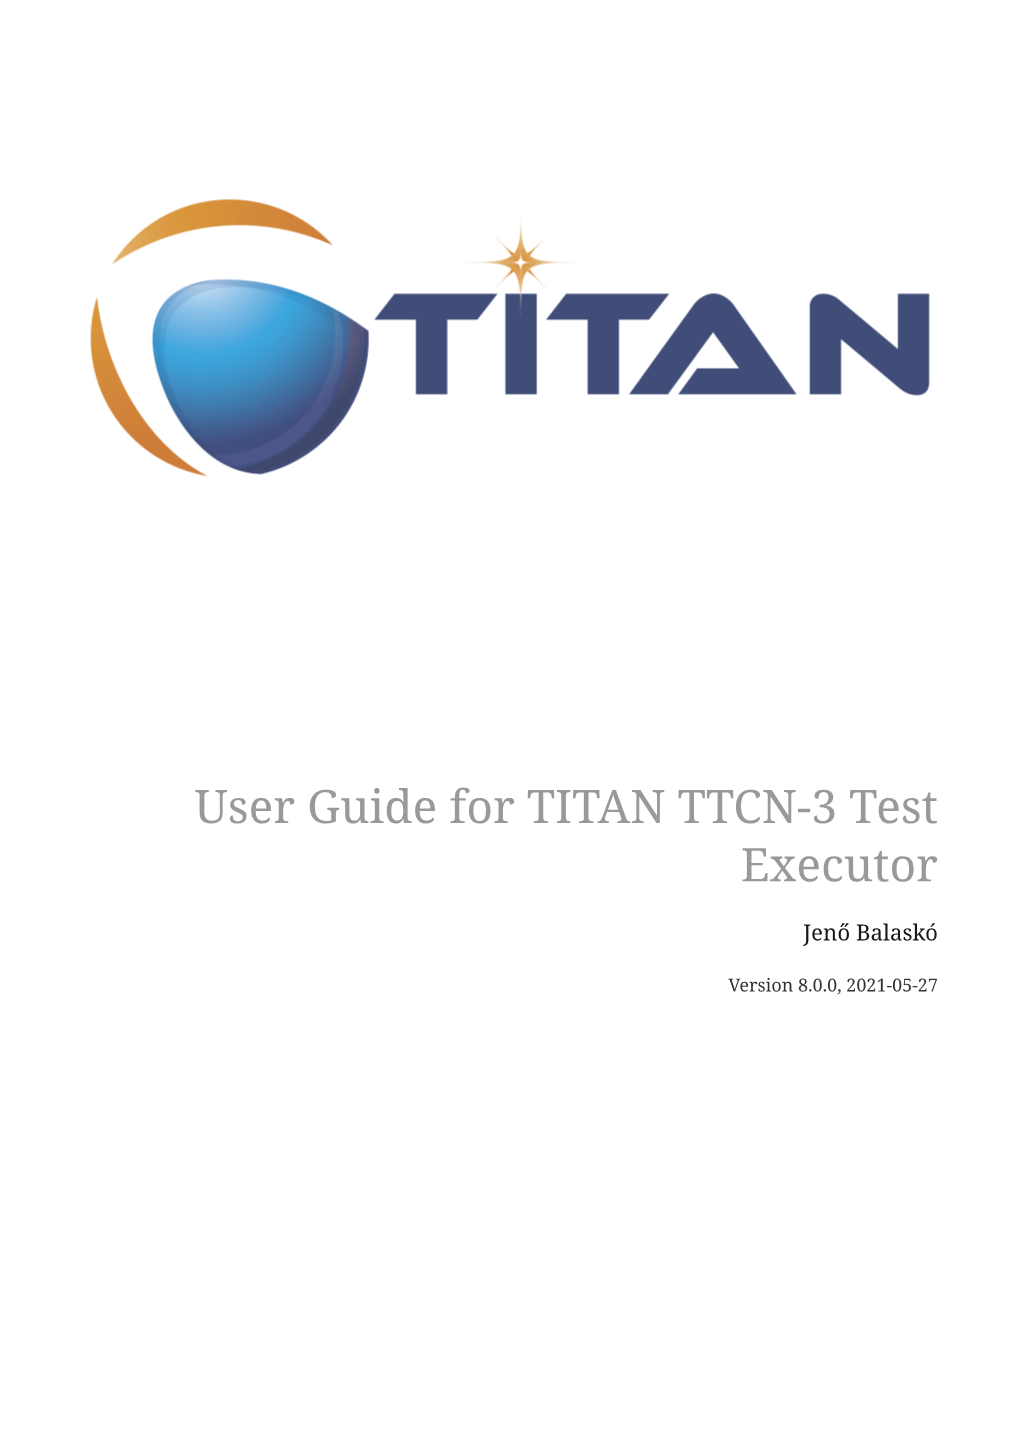 User Guide for TITAN TTCN-3 Test Executor